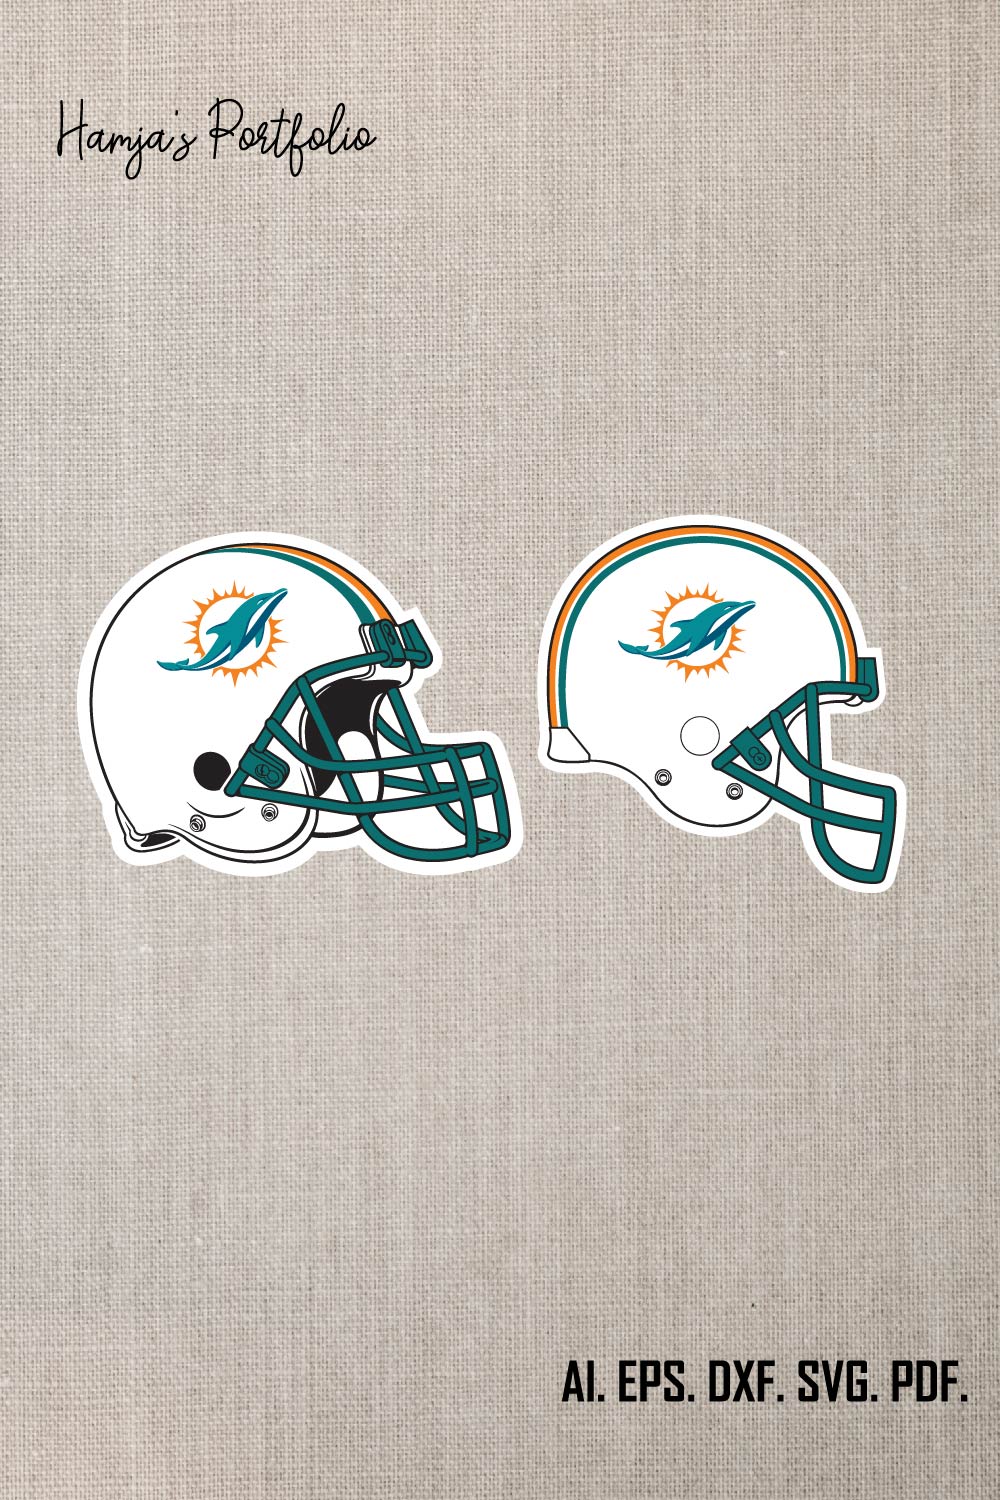 Miami Dolphinns Football SVG ll Sport vector logo set pinterest preview image.